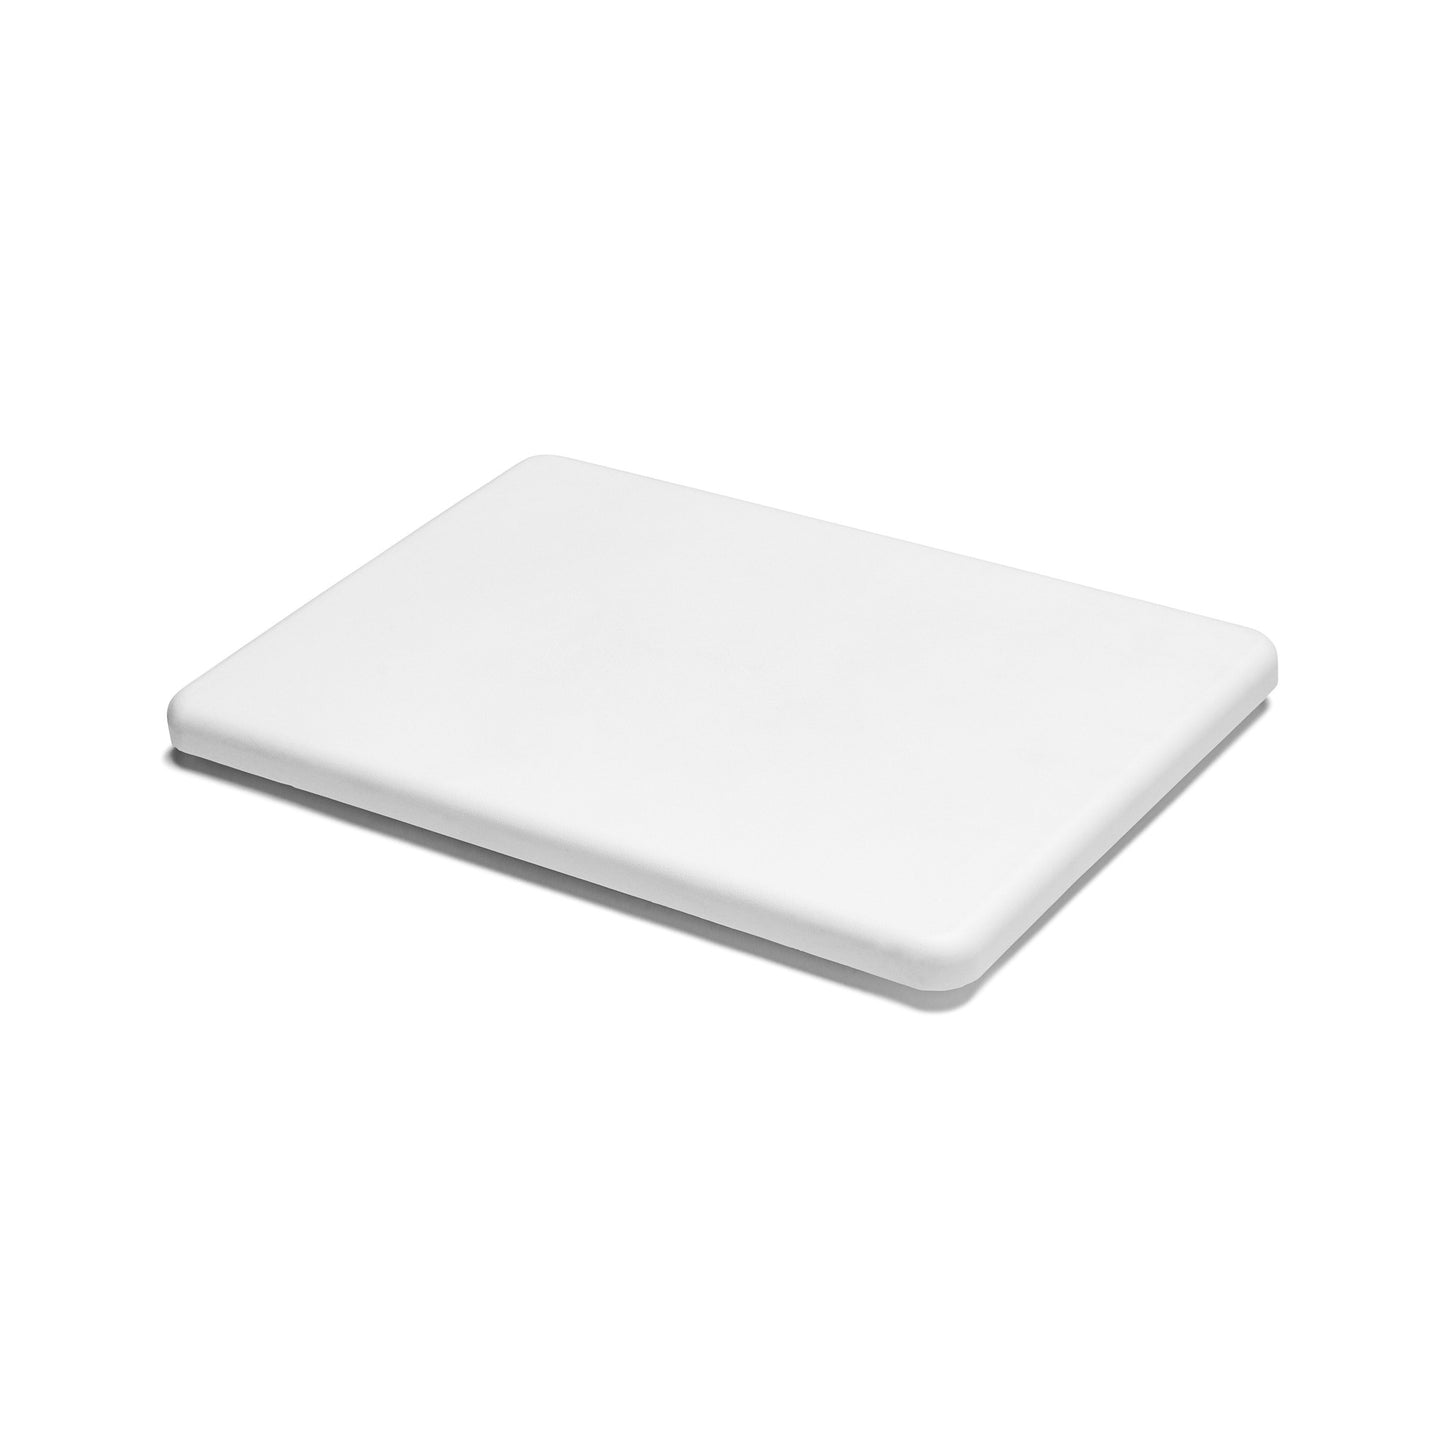 Seachrome Lifestyle & Wellness 19" W x 12" D White Polyurethane Closed Cell Foam Silhouette Seat Pad